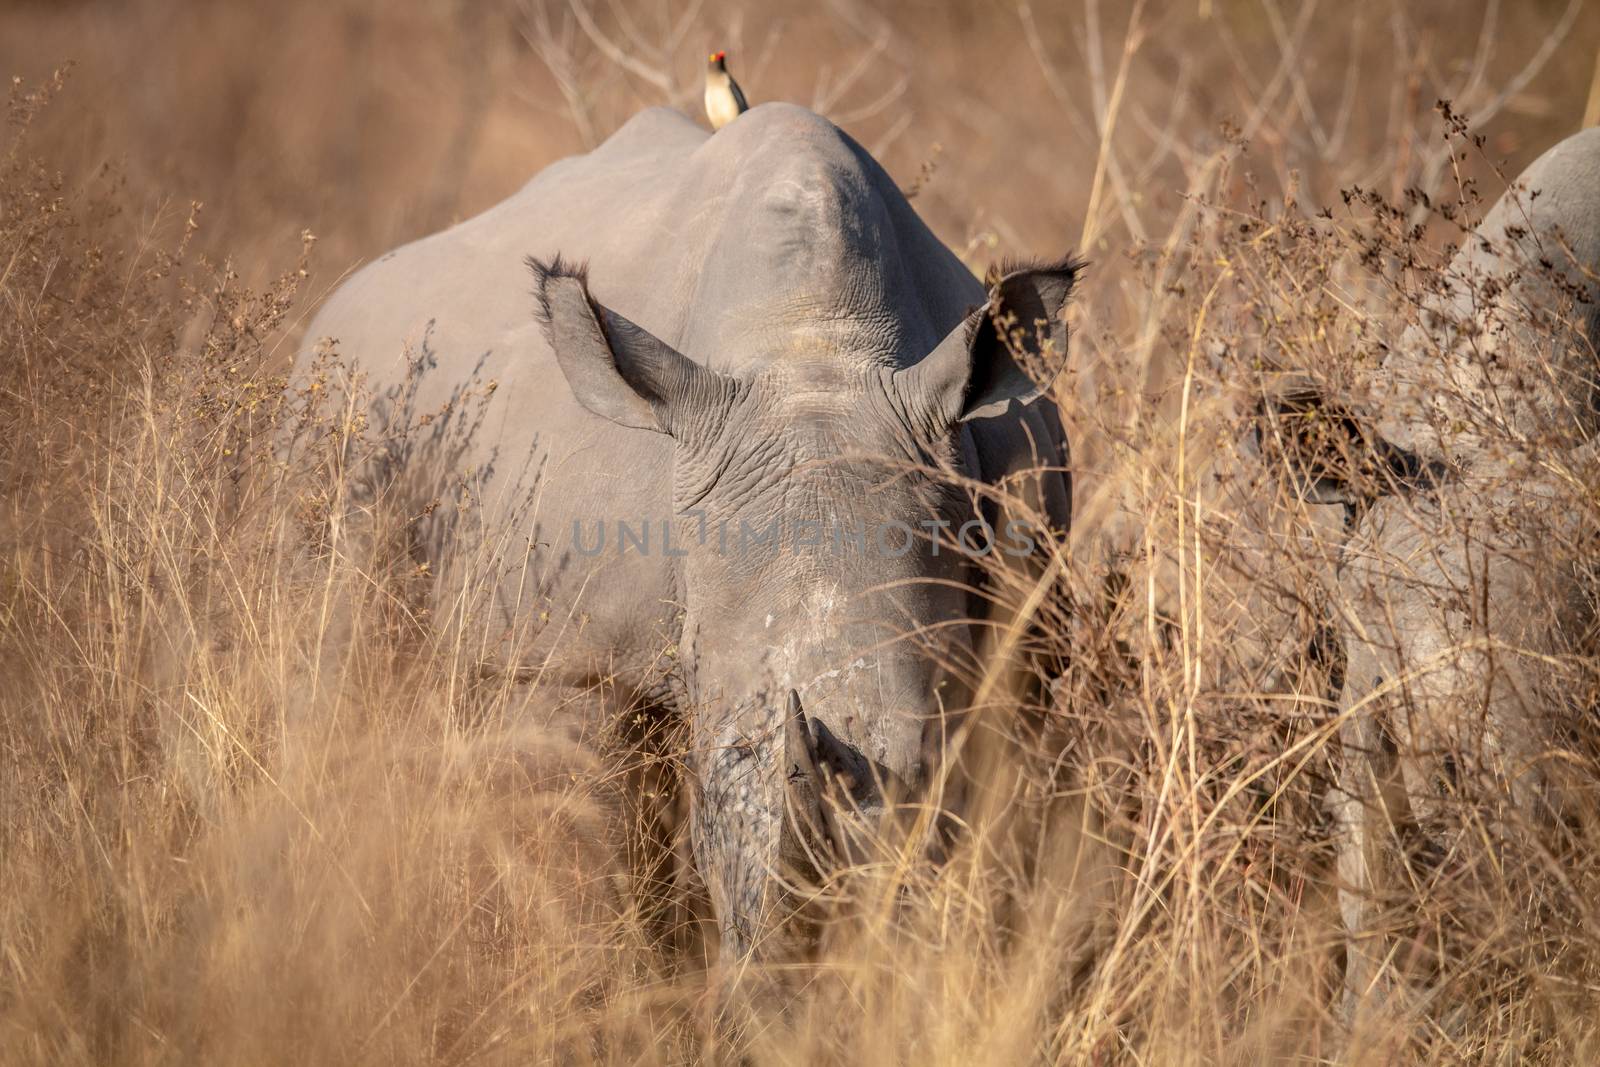 Big White rhino grazing in the high grass. by Simoneemanphotography